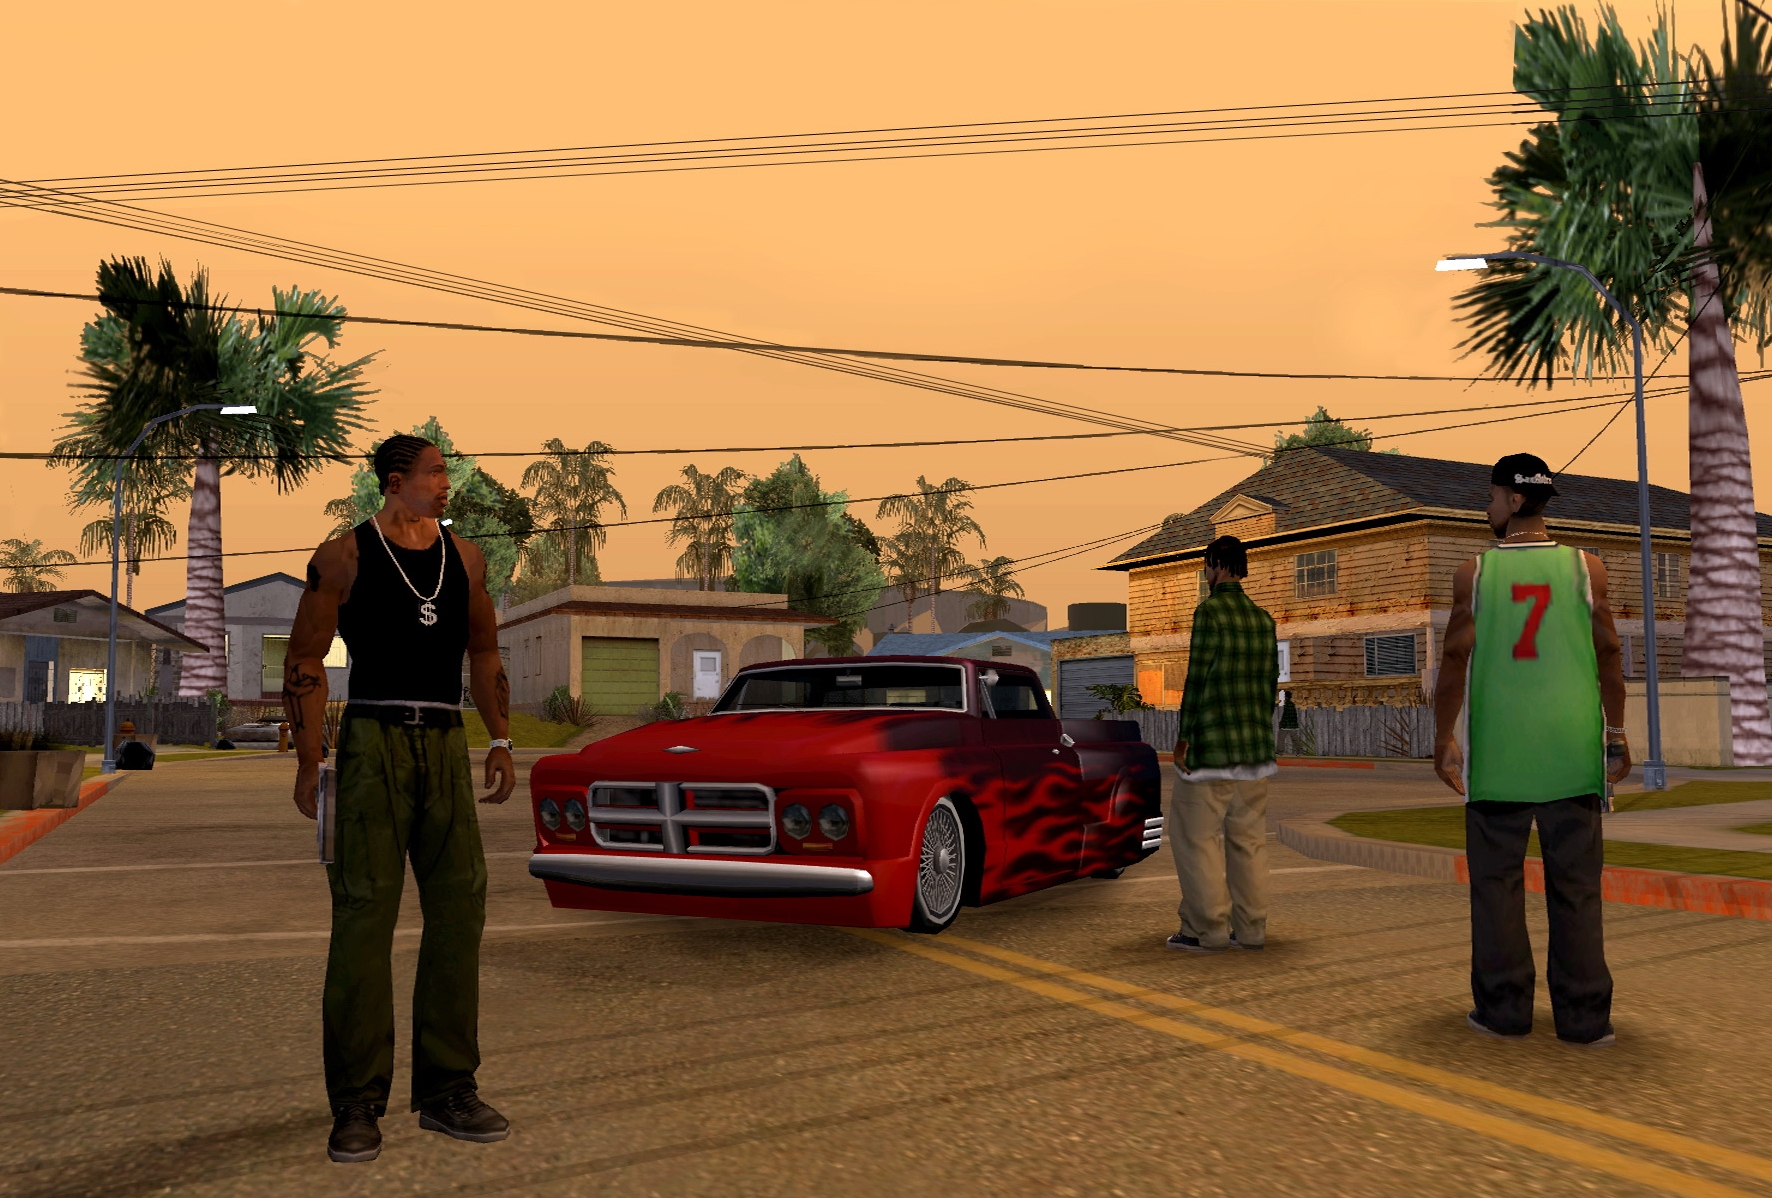 Grand Theft Auto: San Andreas PS2 Classics Gameplay 